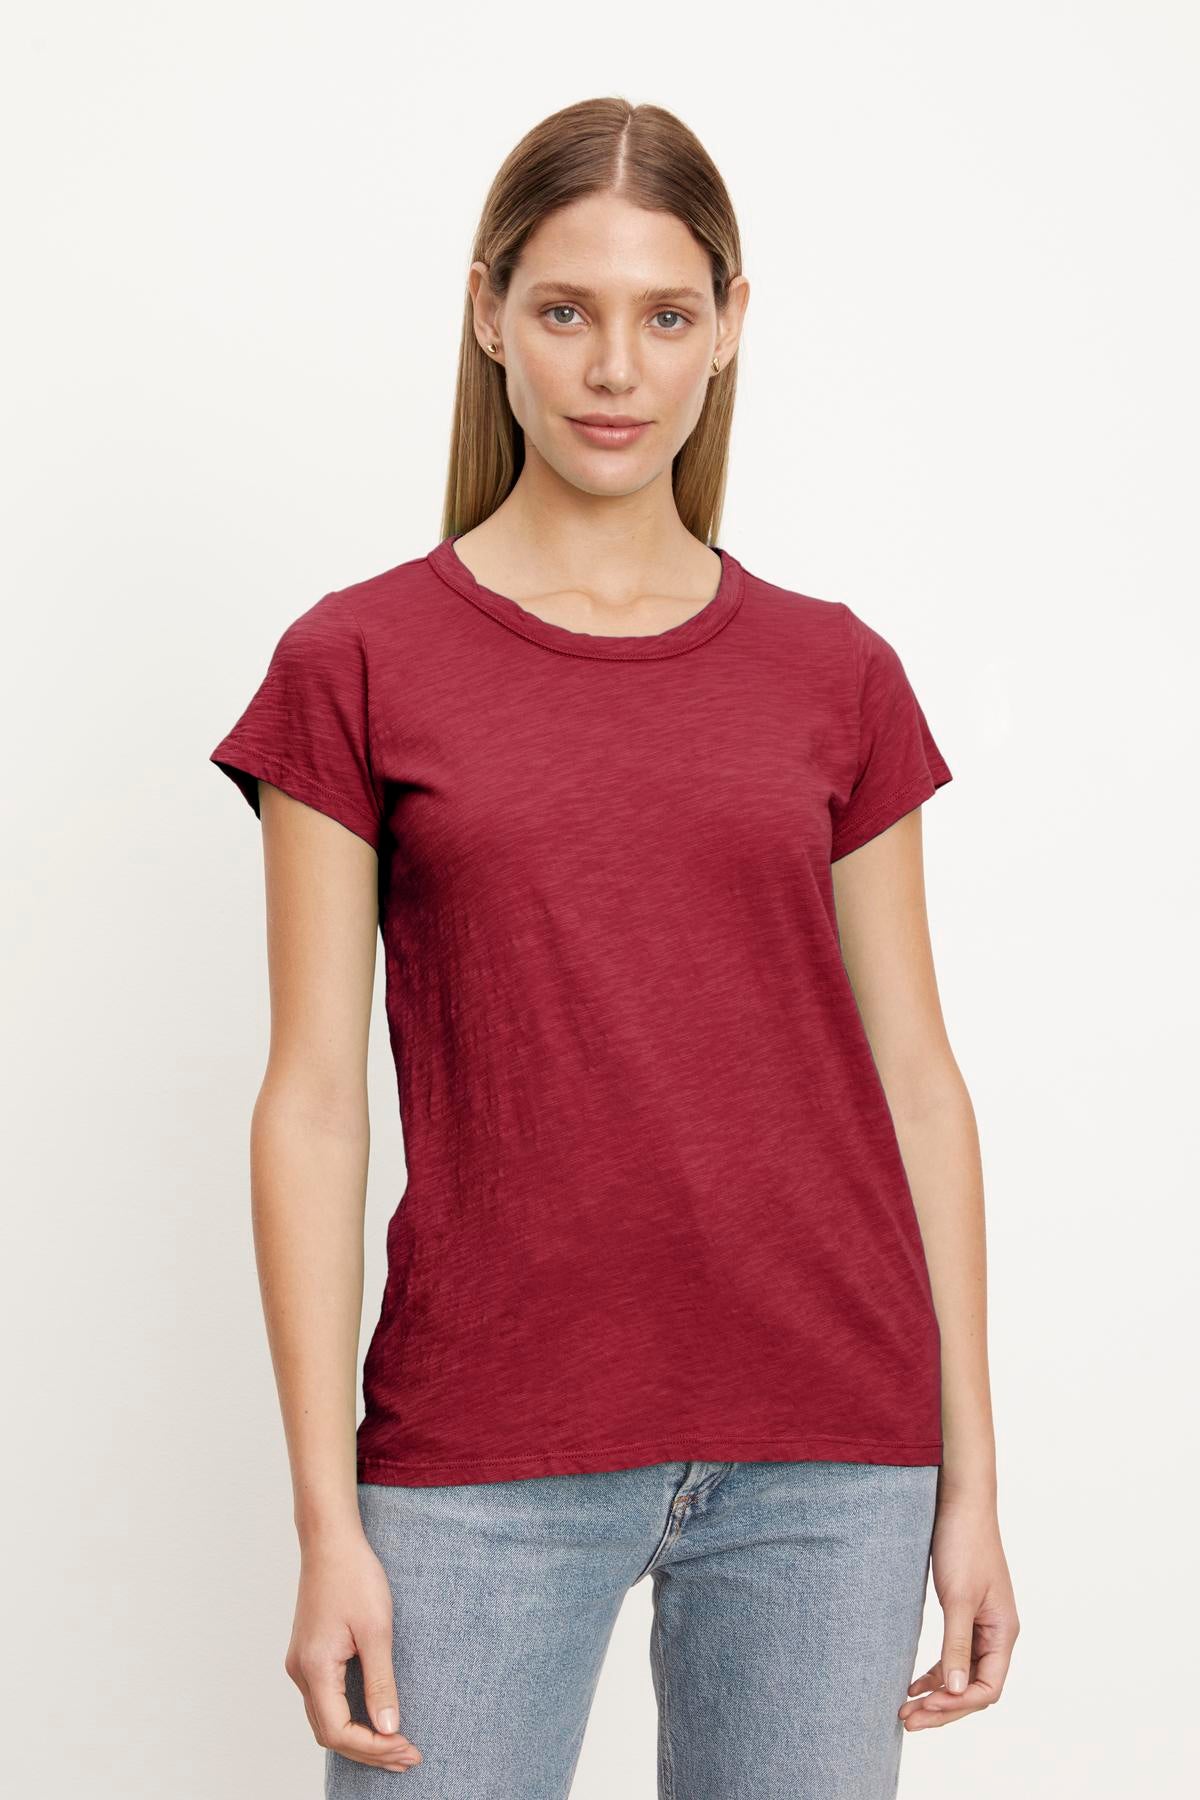 A woman wearing a Velvet by Graham & Spencer burgundy TILLY ORIGINAL SLUB CREW NECK TEE t-shirt.-26883540287681